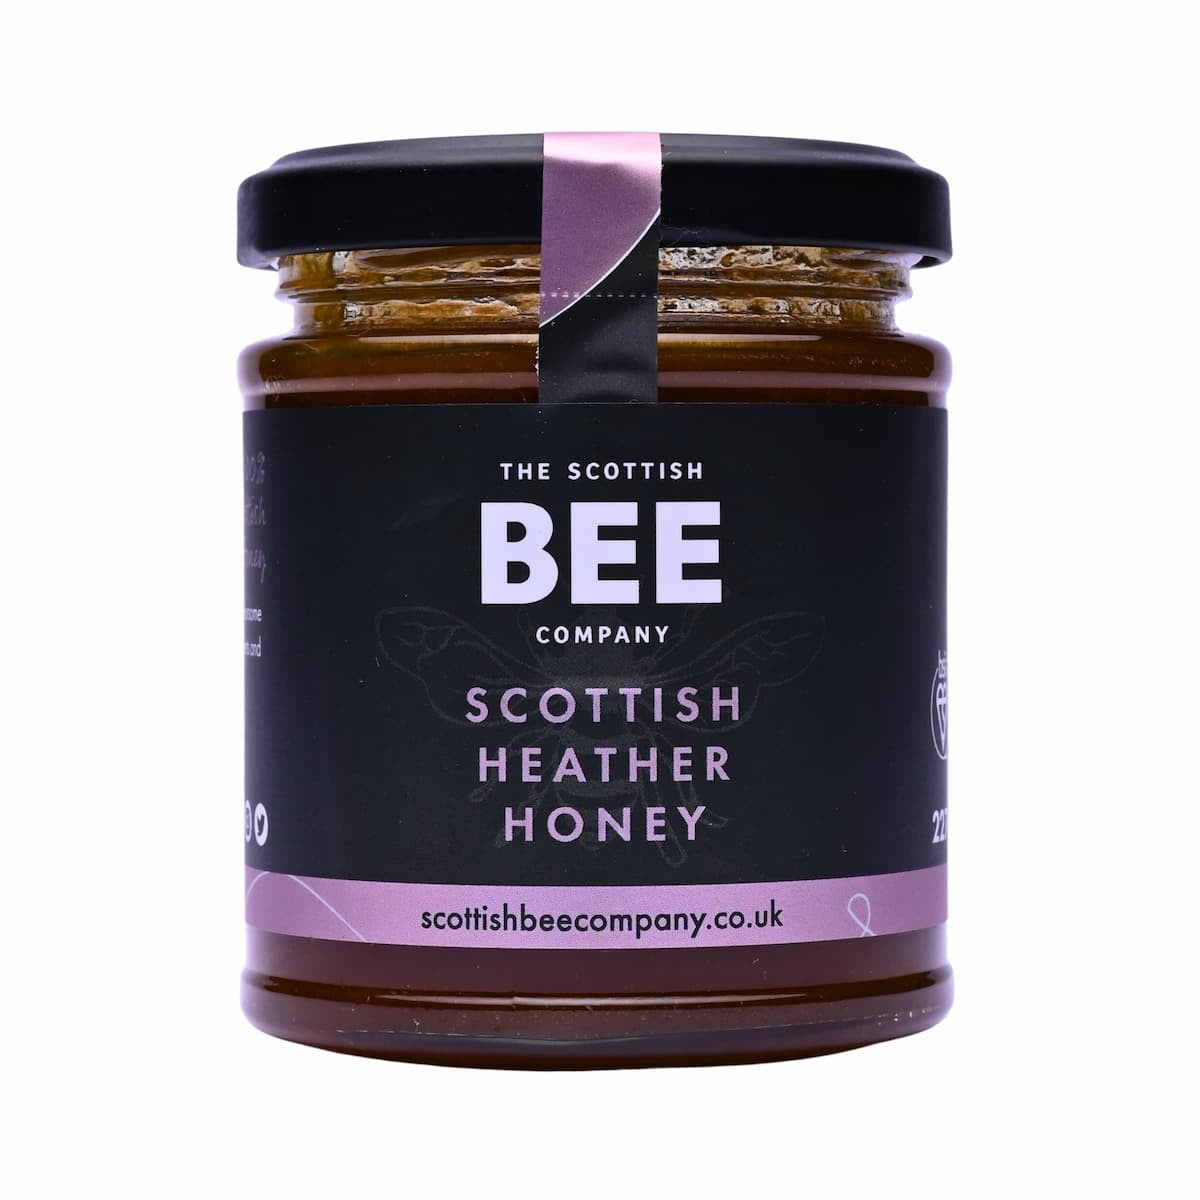 Add 1 x The Scottish Bee Company Scottish Heather Honey